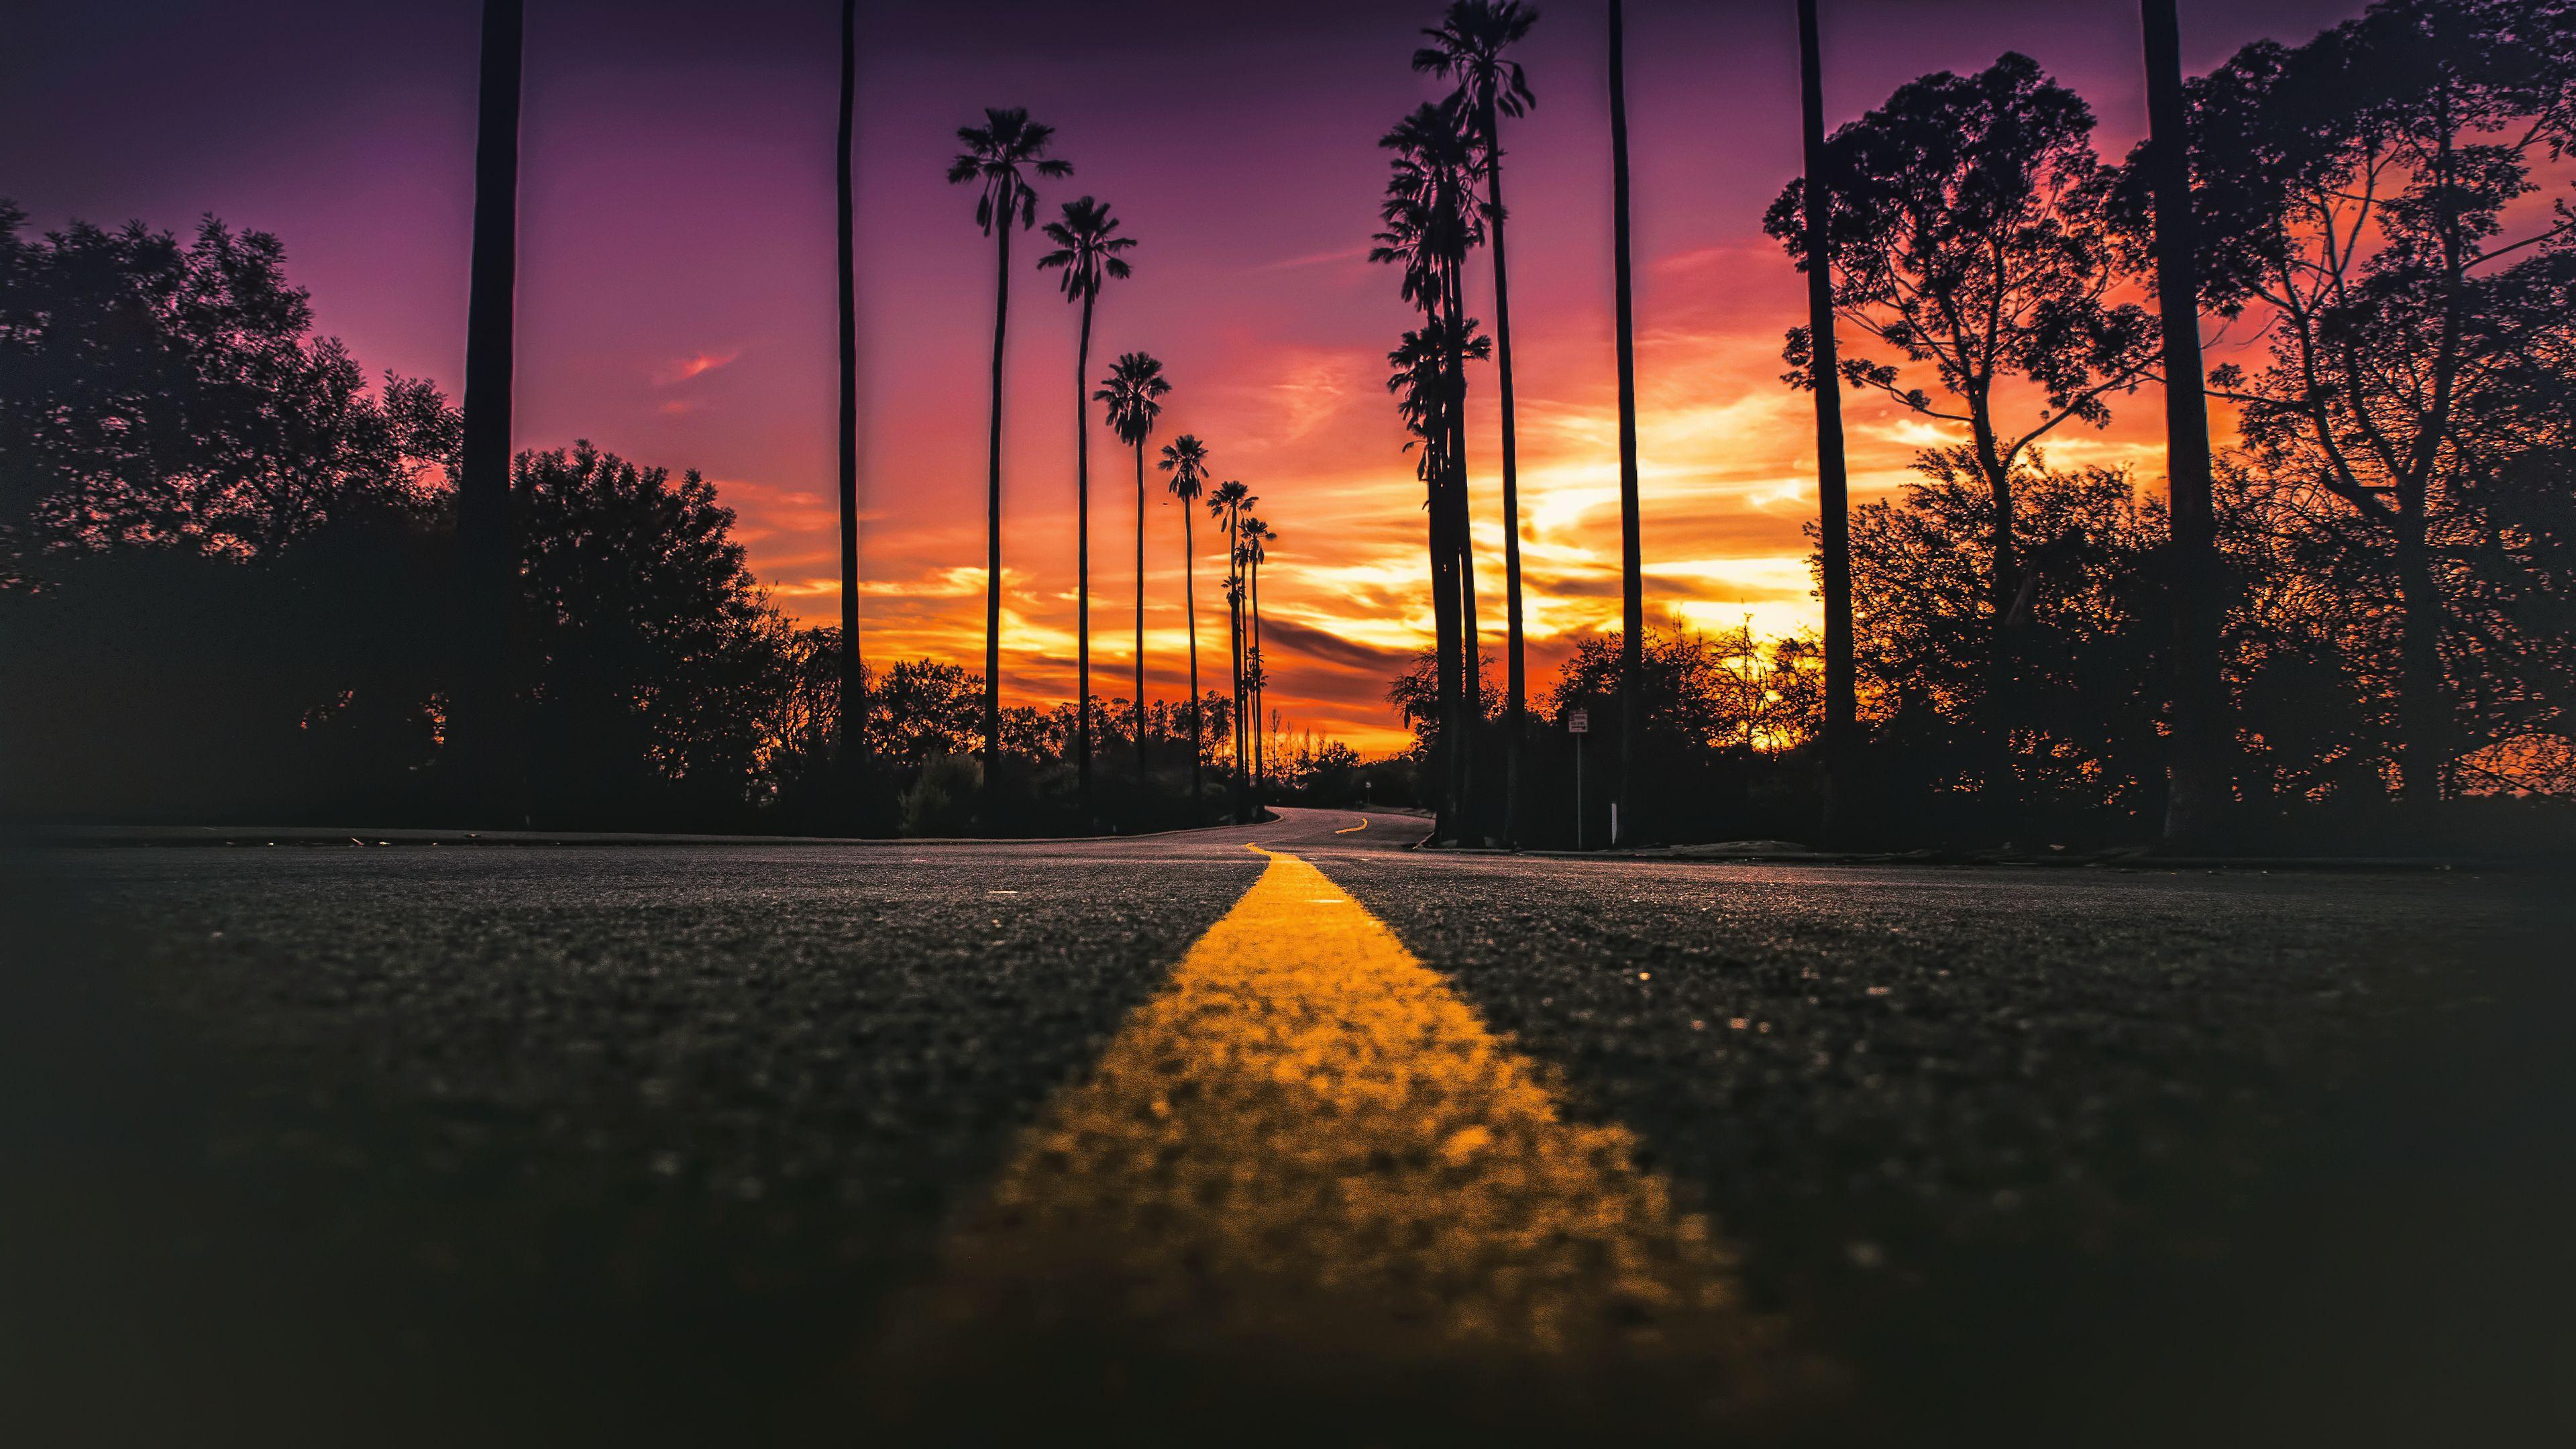 California, #USA, #road, #sunlight, #street, #sunset, #worm's eye